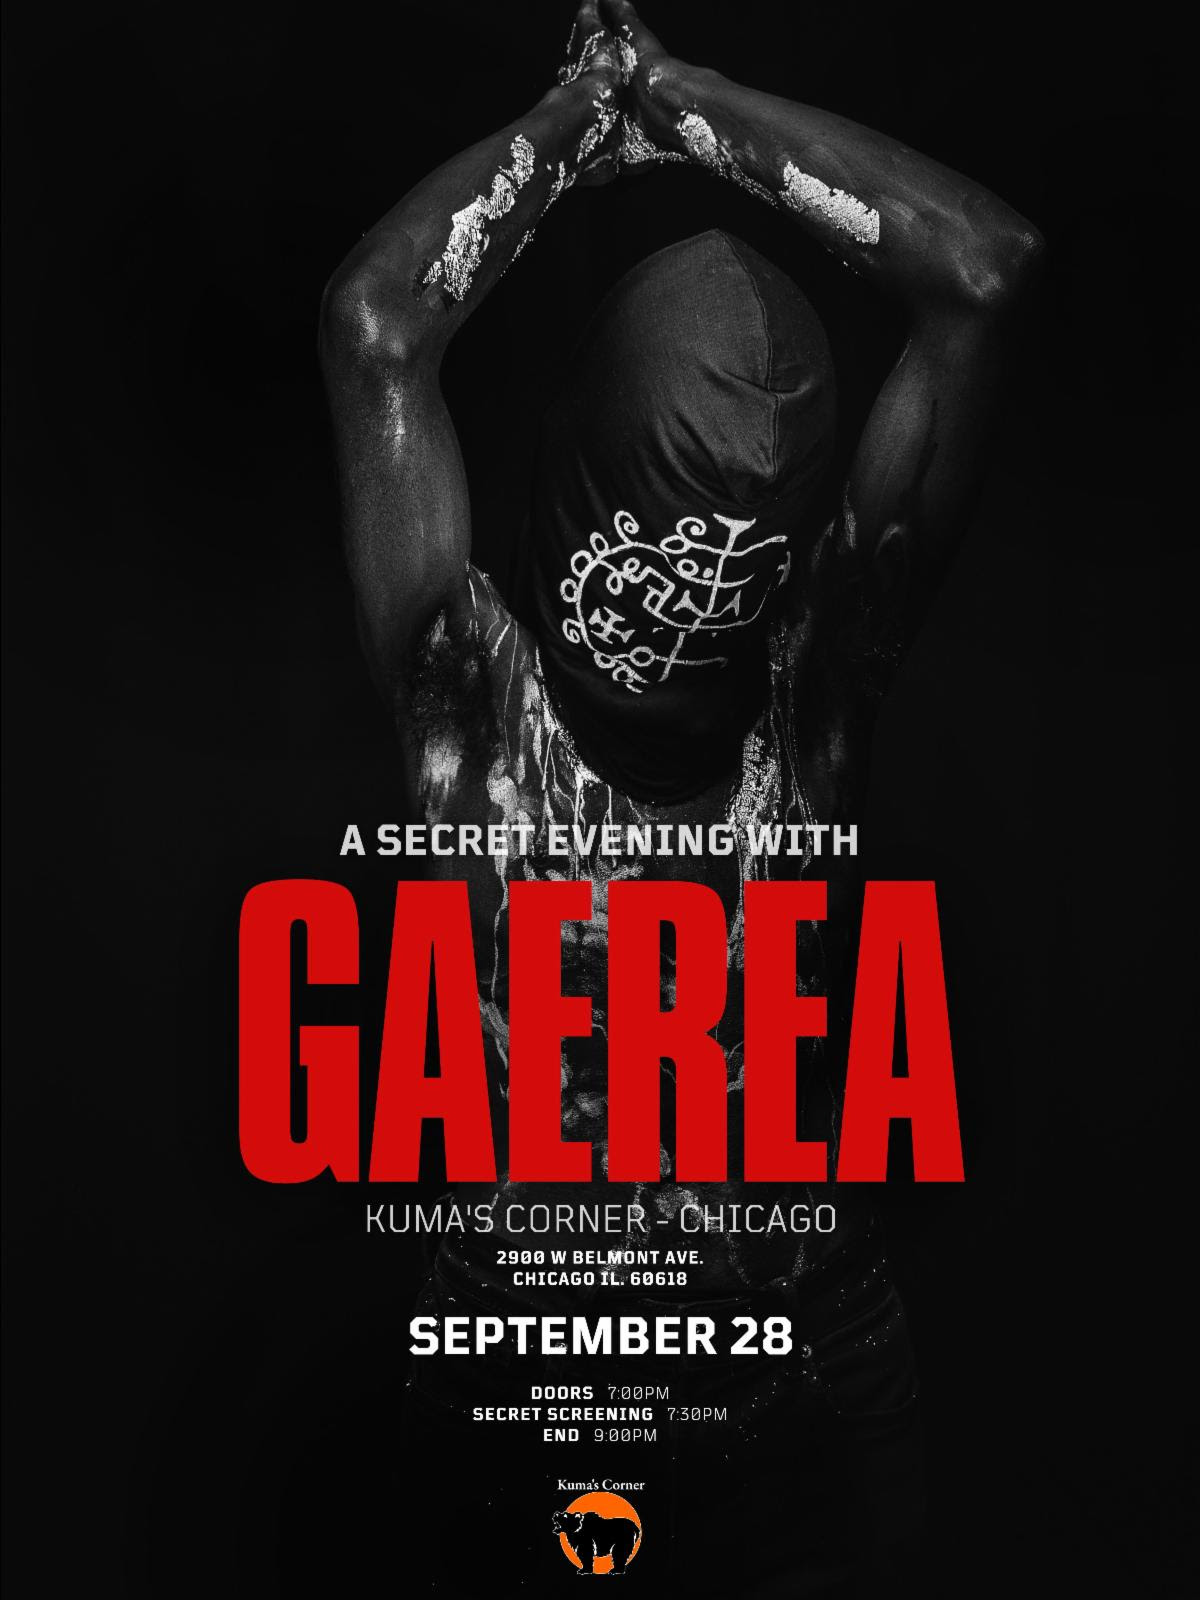 Gaerea 'Secret Evening With' Poster